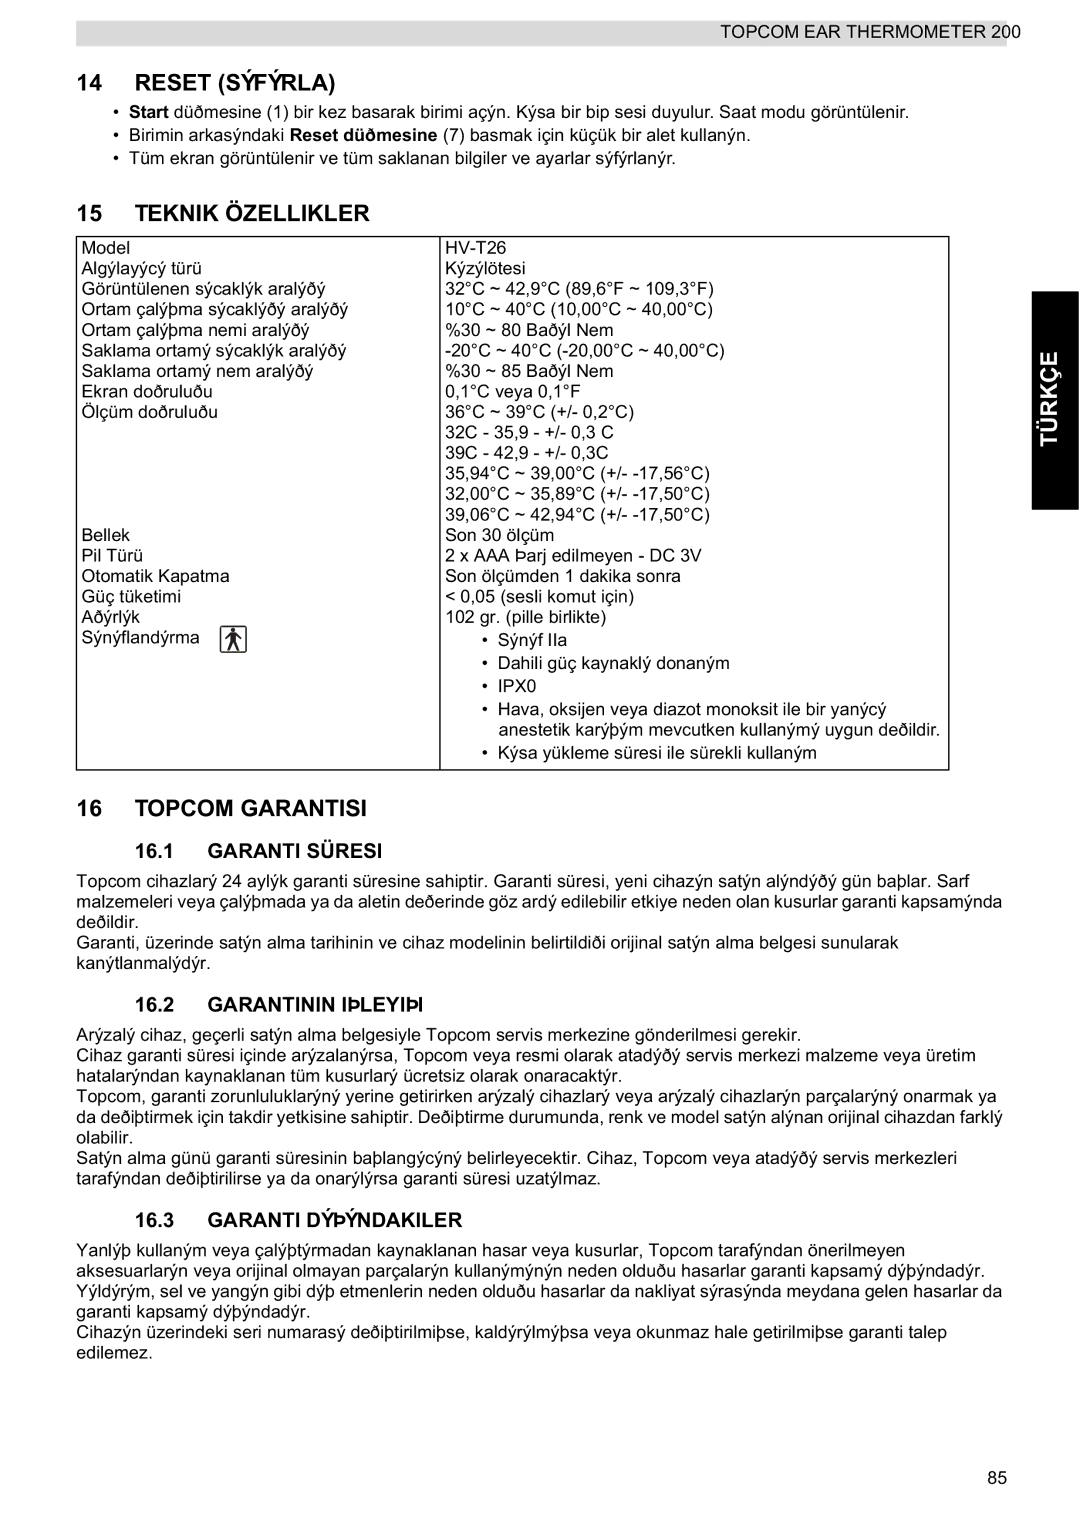 Topcom 200 manual do utilizador Reset Sýfýrla, Teknik Özellikler, Topcom Garantisi 